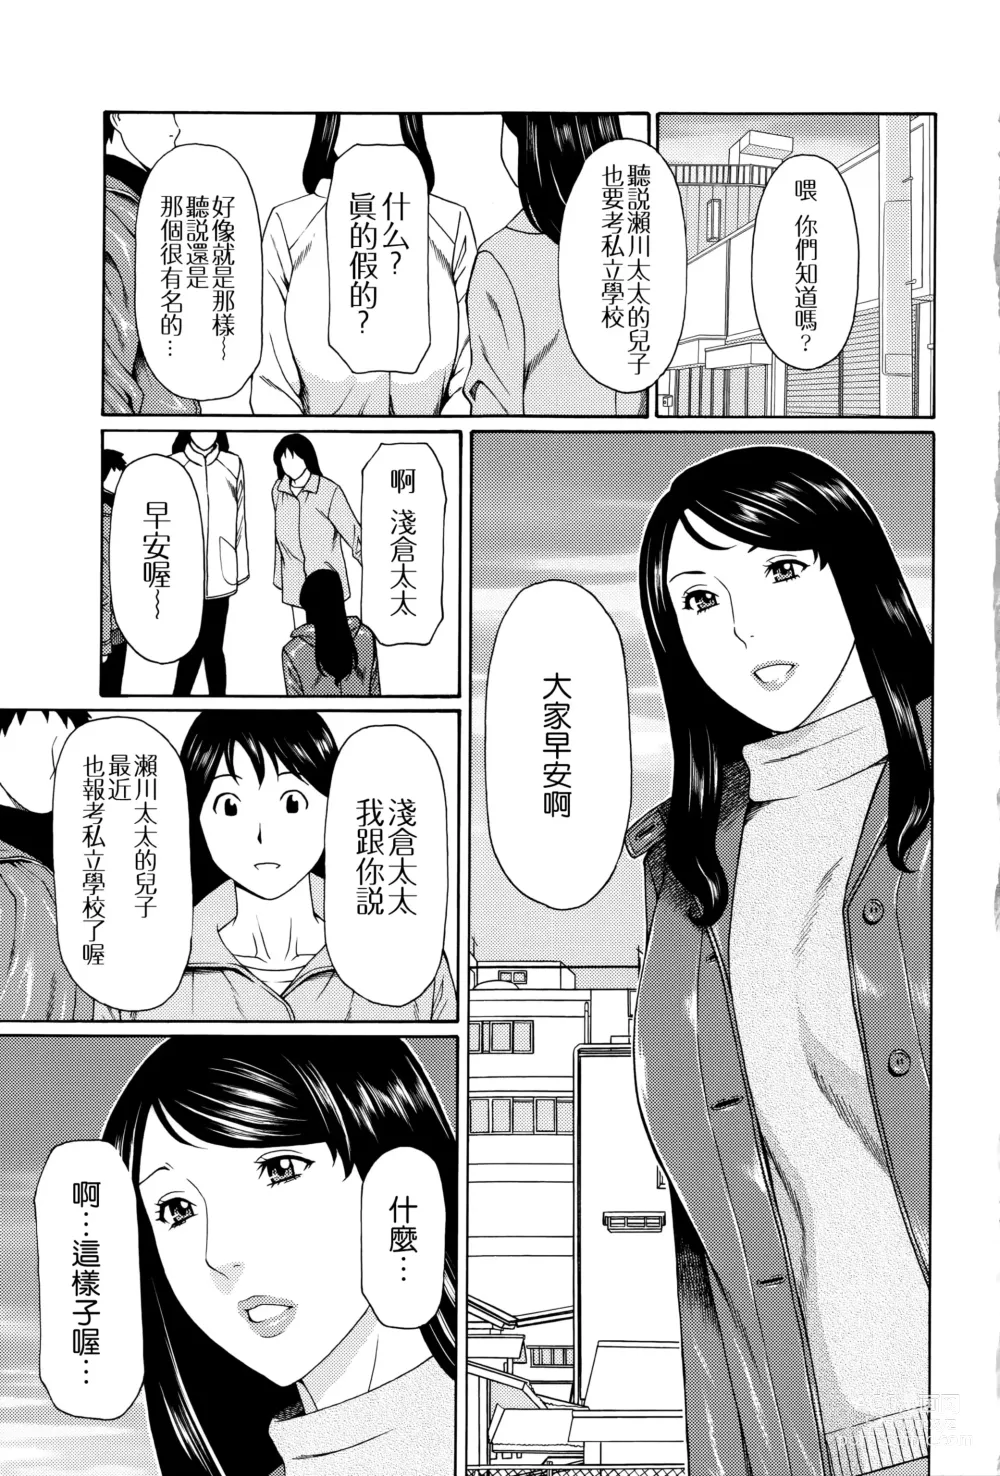 Page 6 of manga Mumyou no Uzu